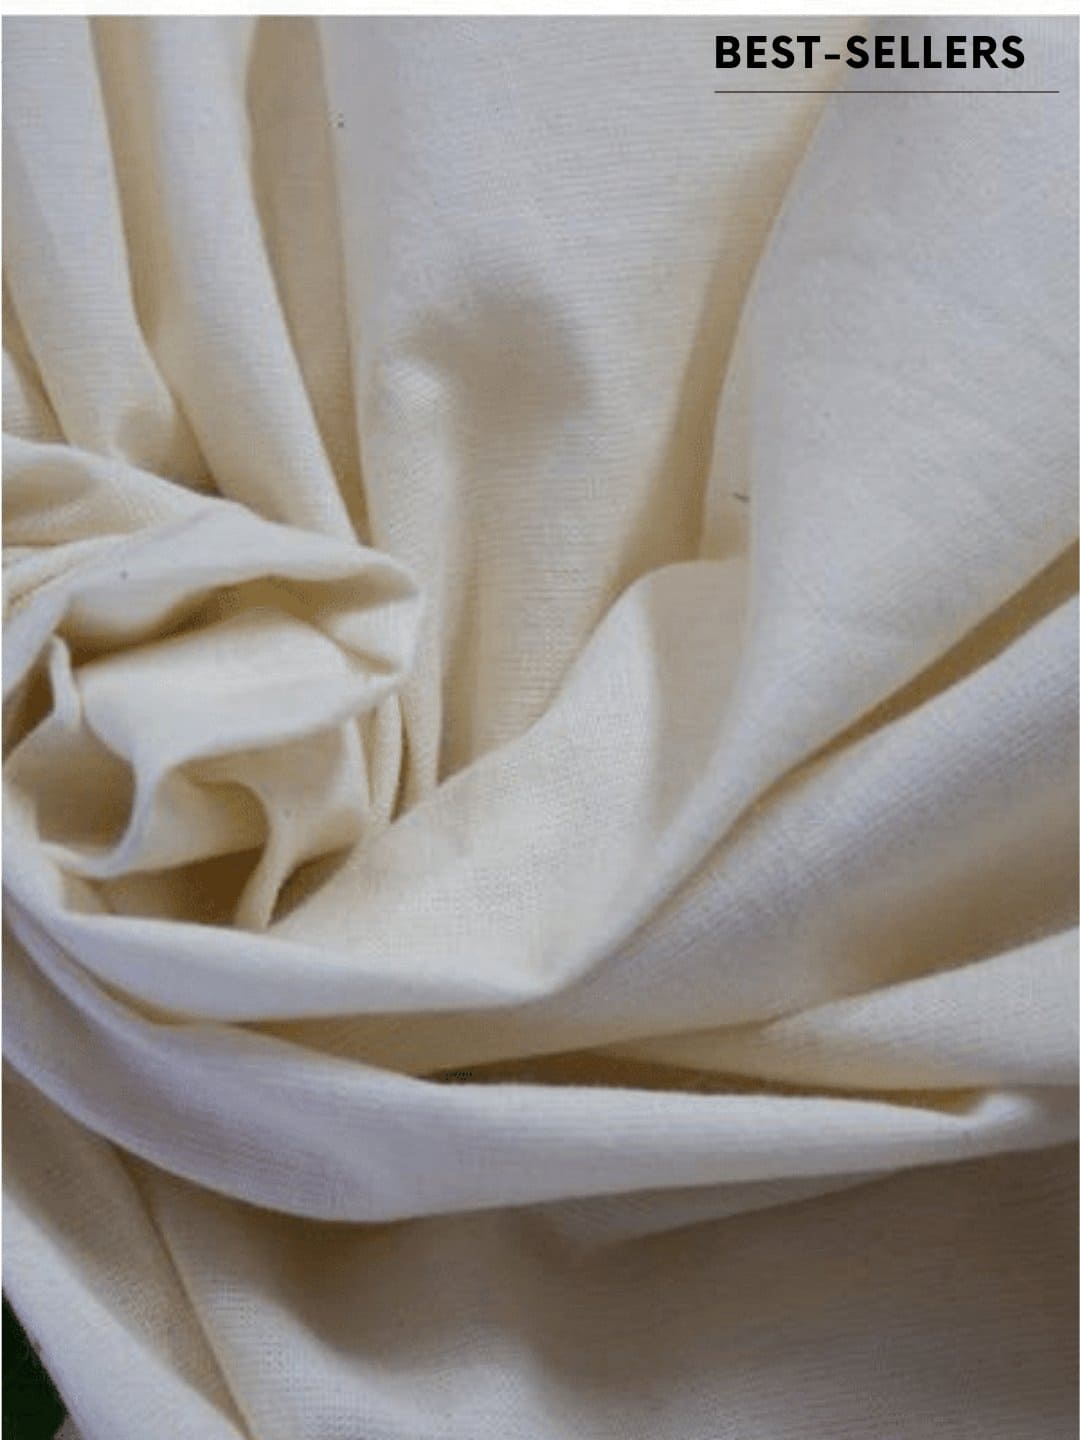 Cream Khadi Cotton Fabric - Charkha TalesCream Khadi Cotton Fabric